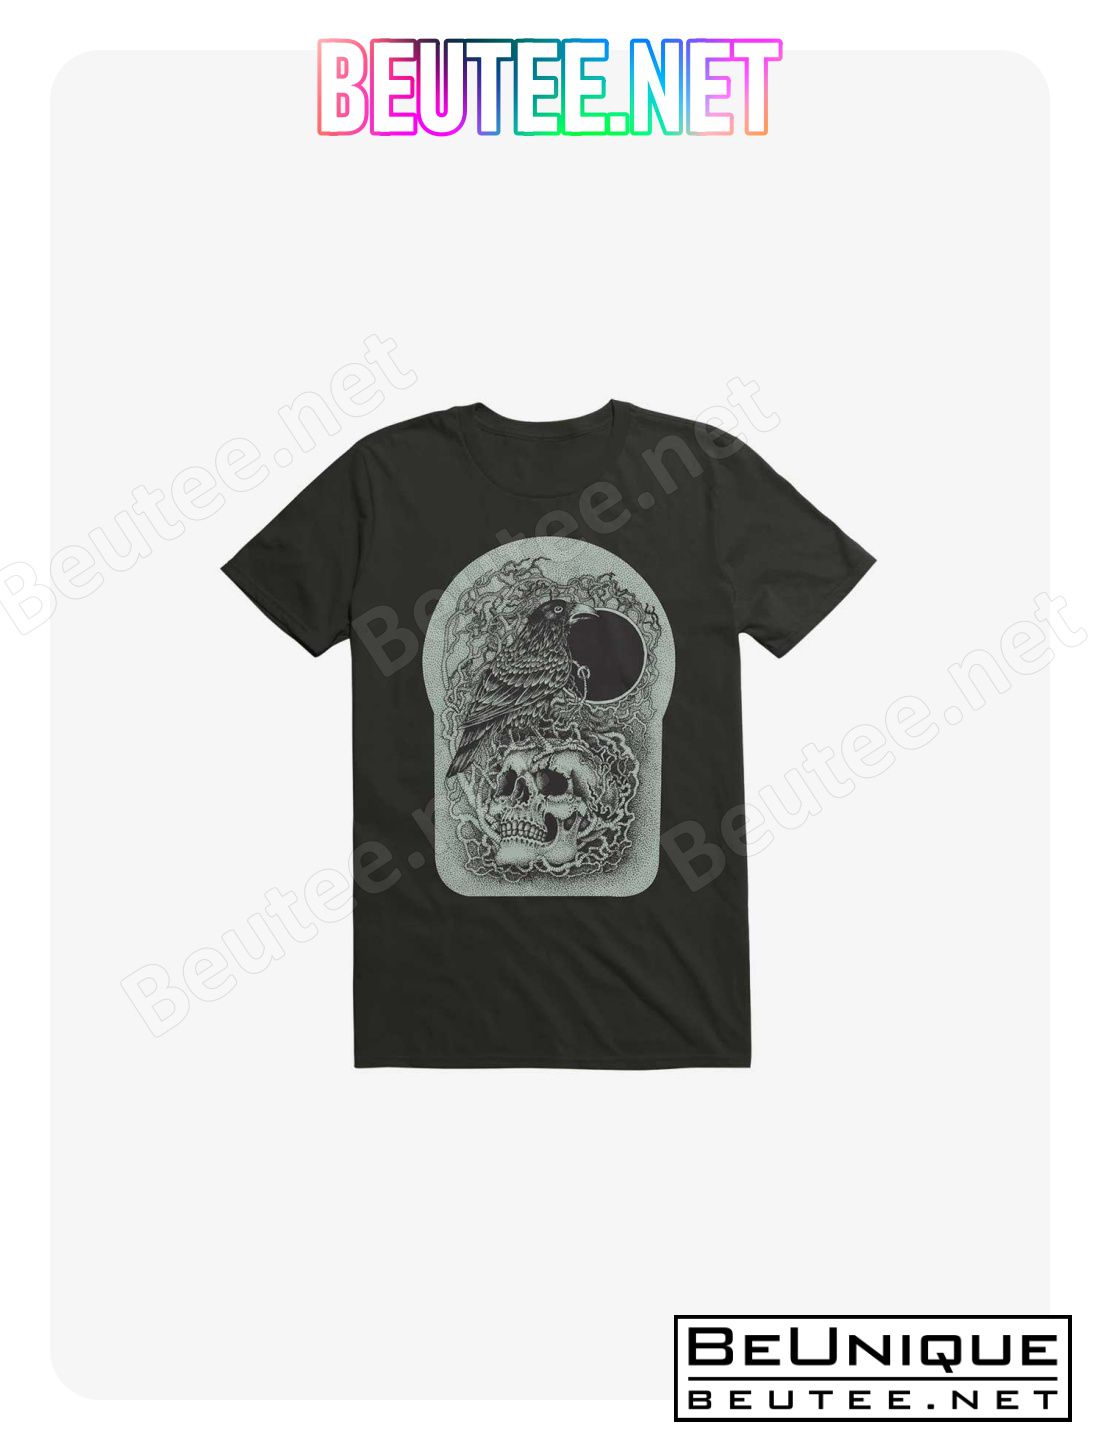 Skull And Raven T-Shirt